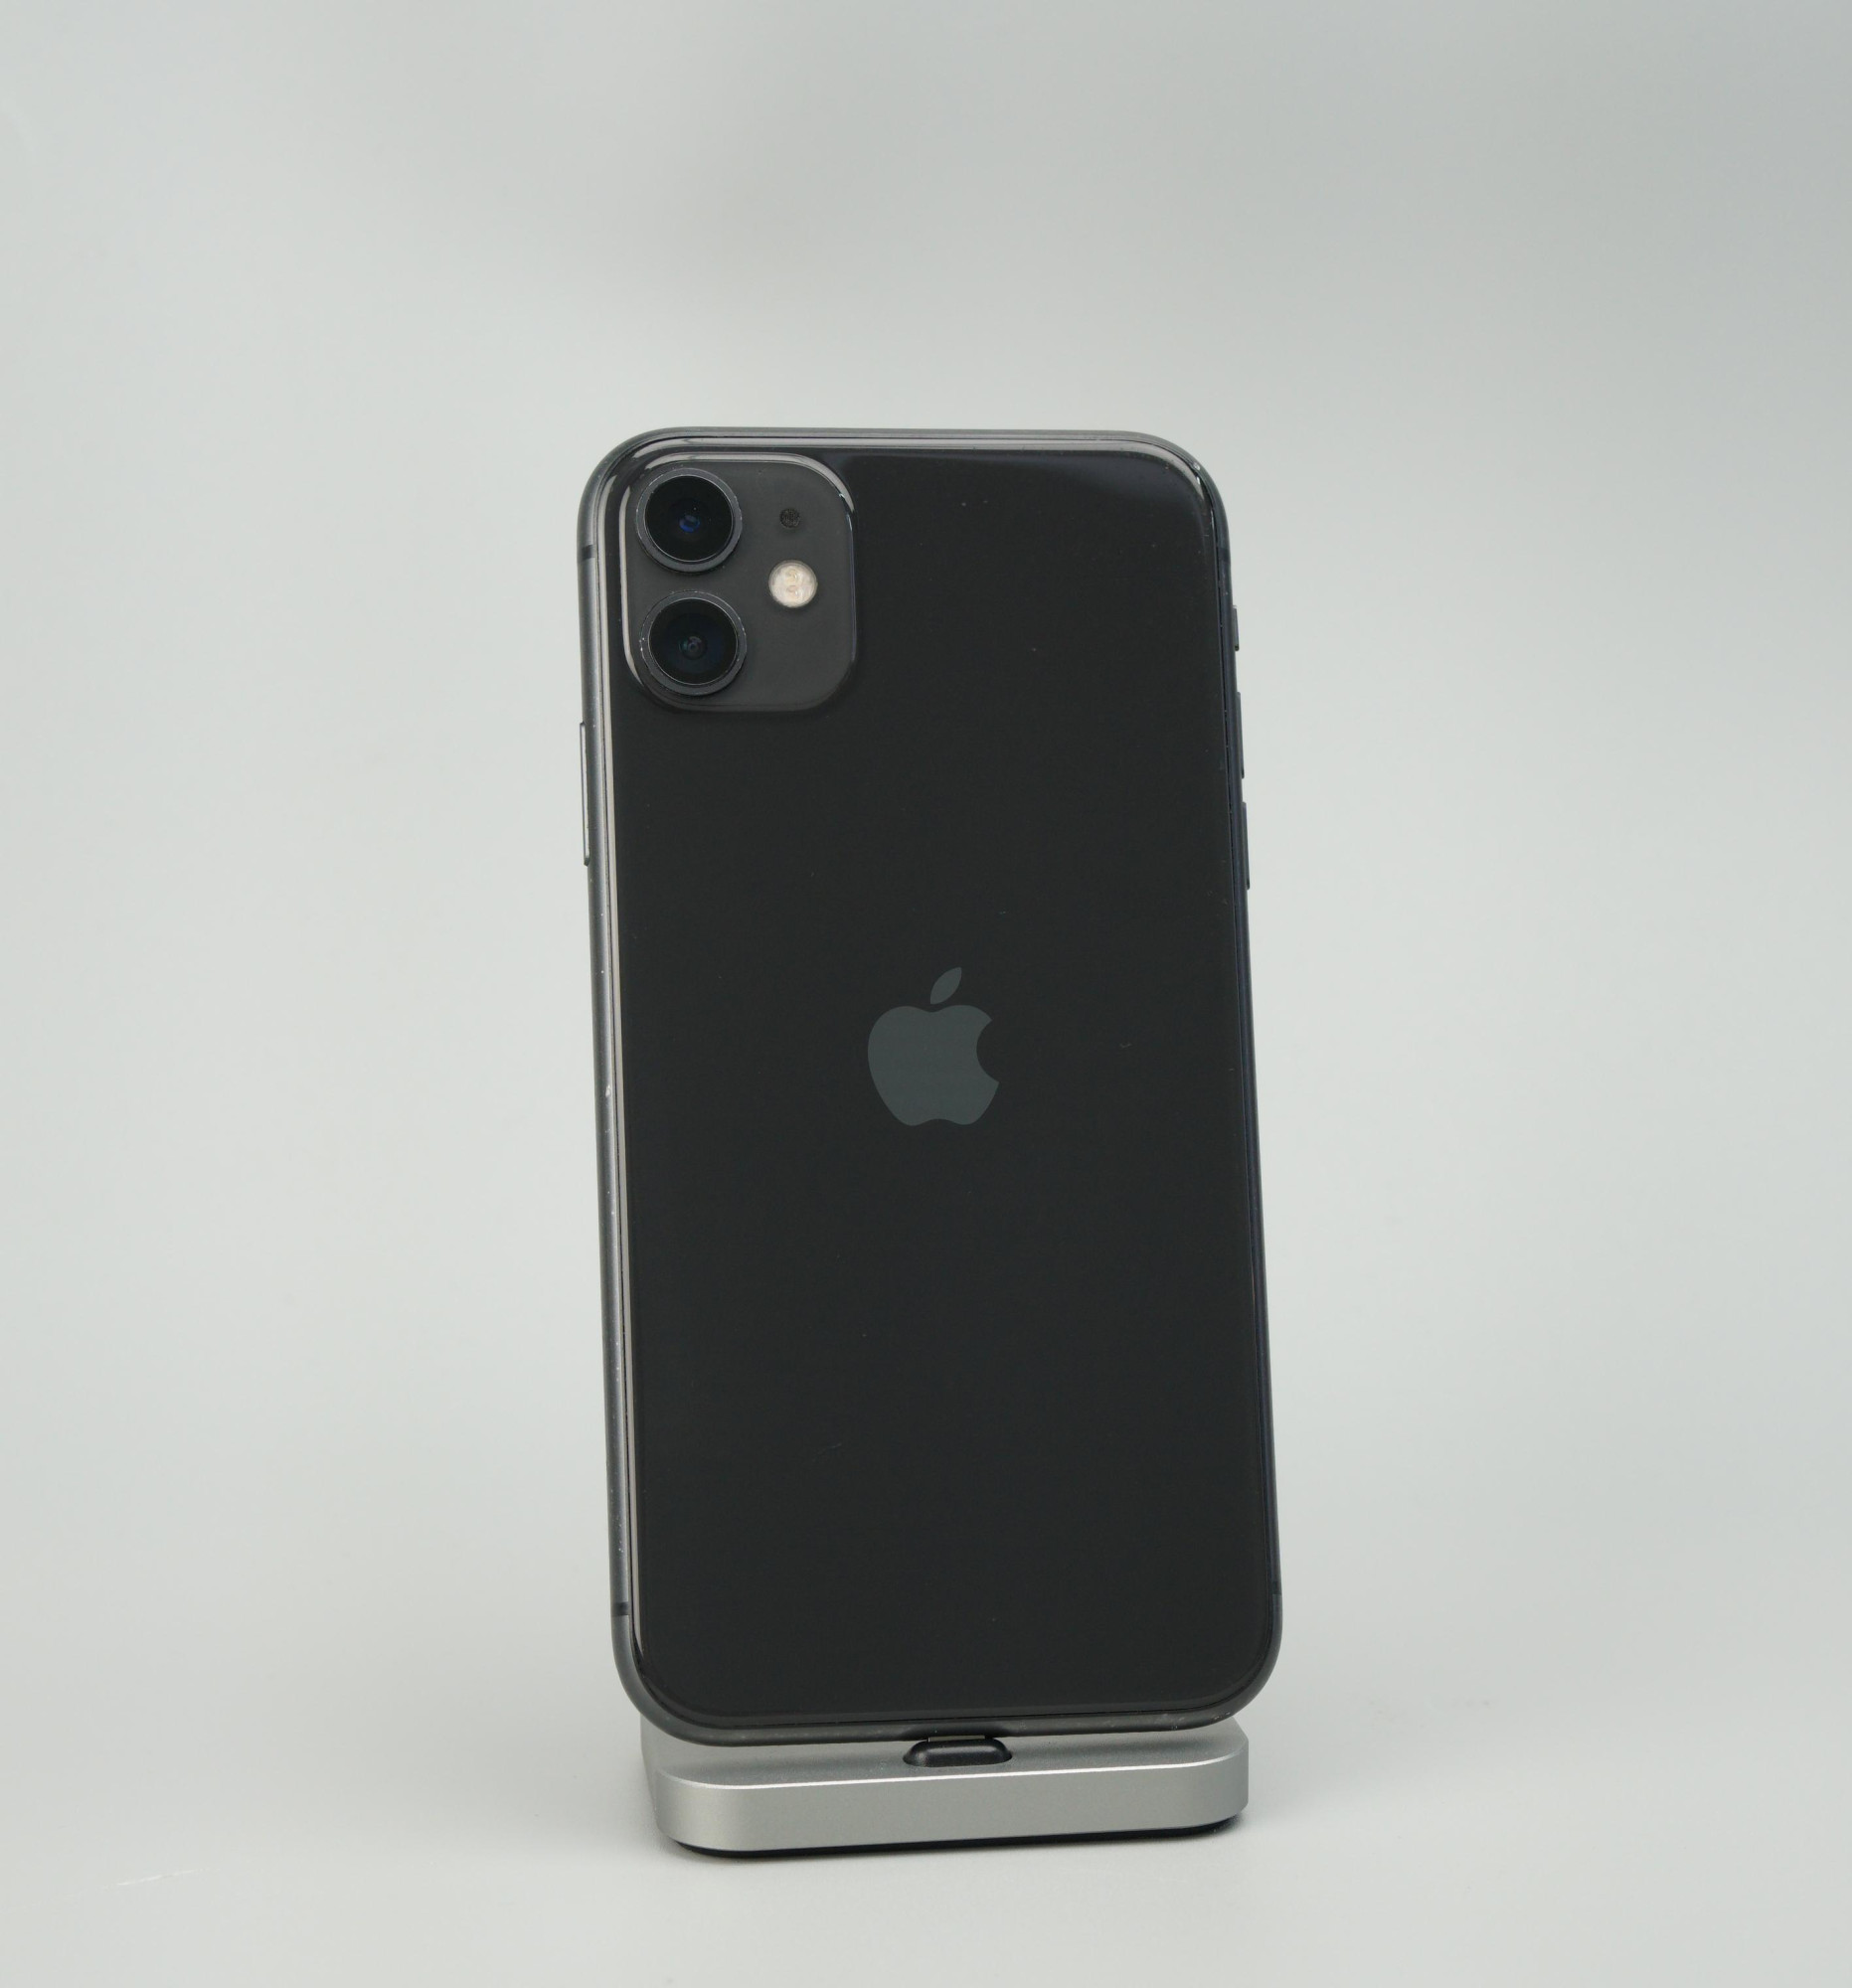 Apple iPhone 11 128GB Black (MWN72CH/A) 1